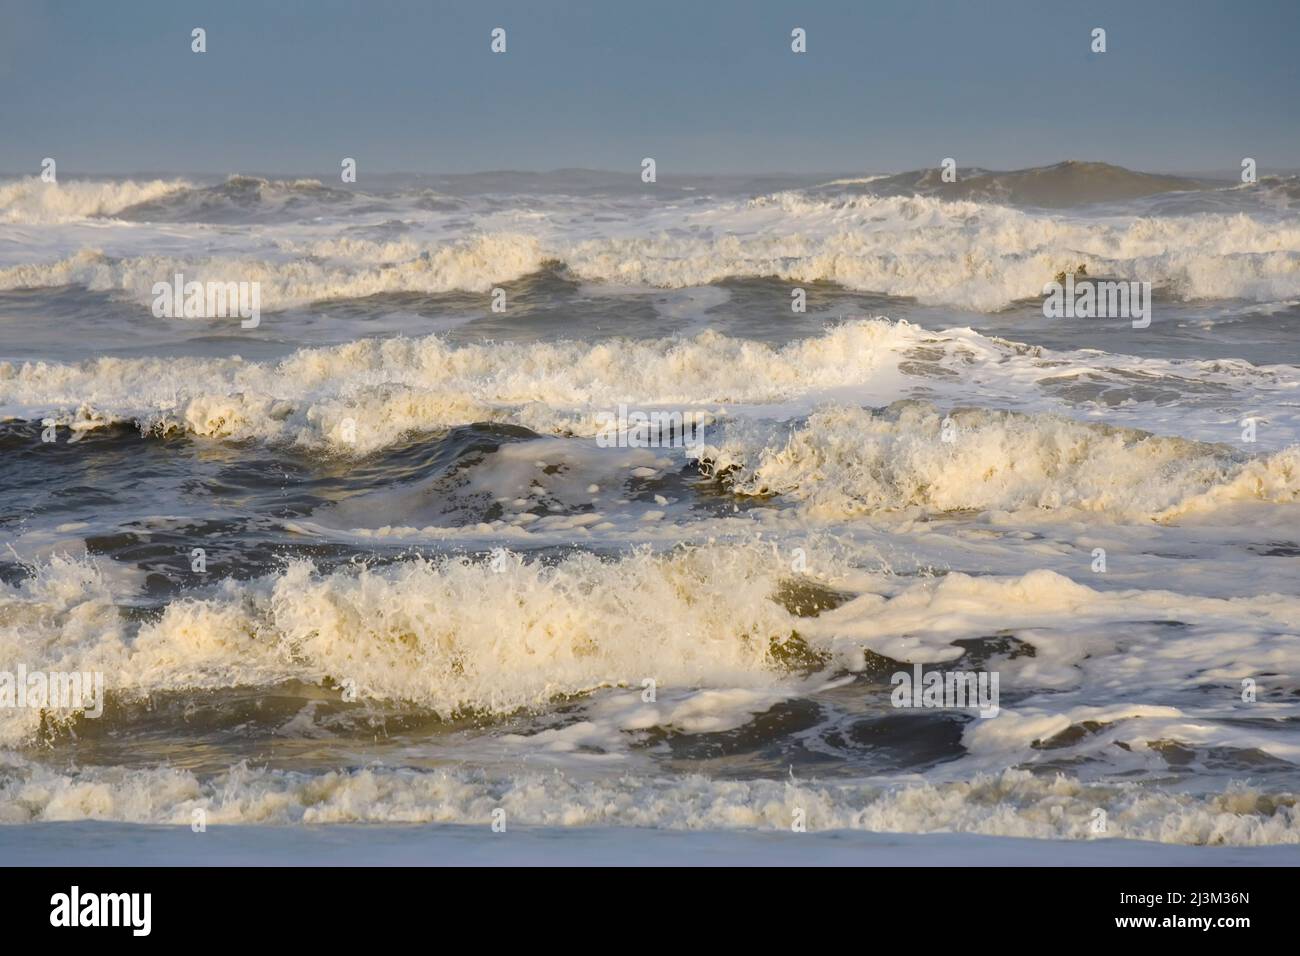 Storm waves pound the shore.; Cape Hatteras, North Carolina. Stock Photo